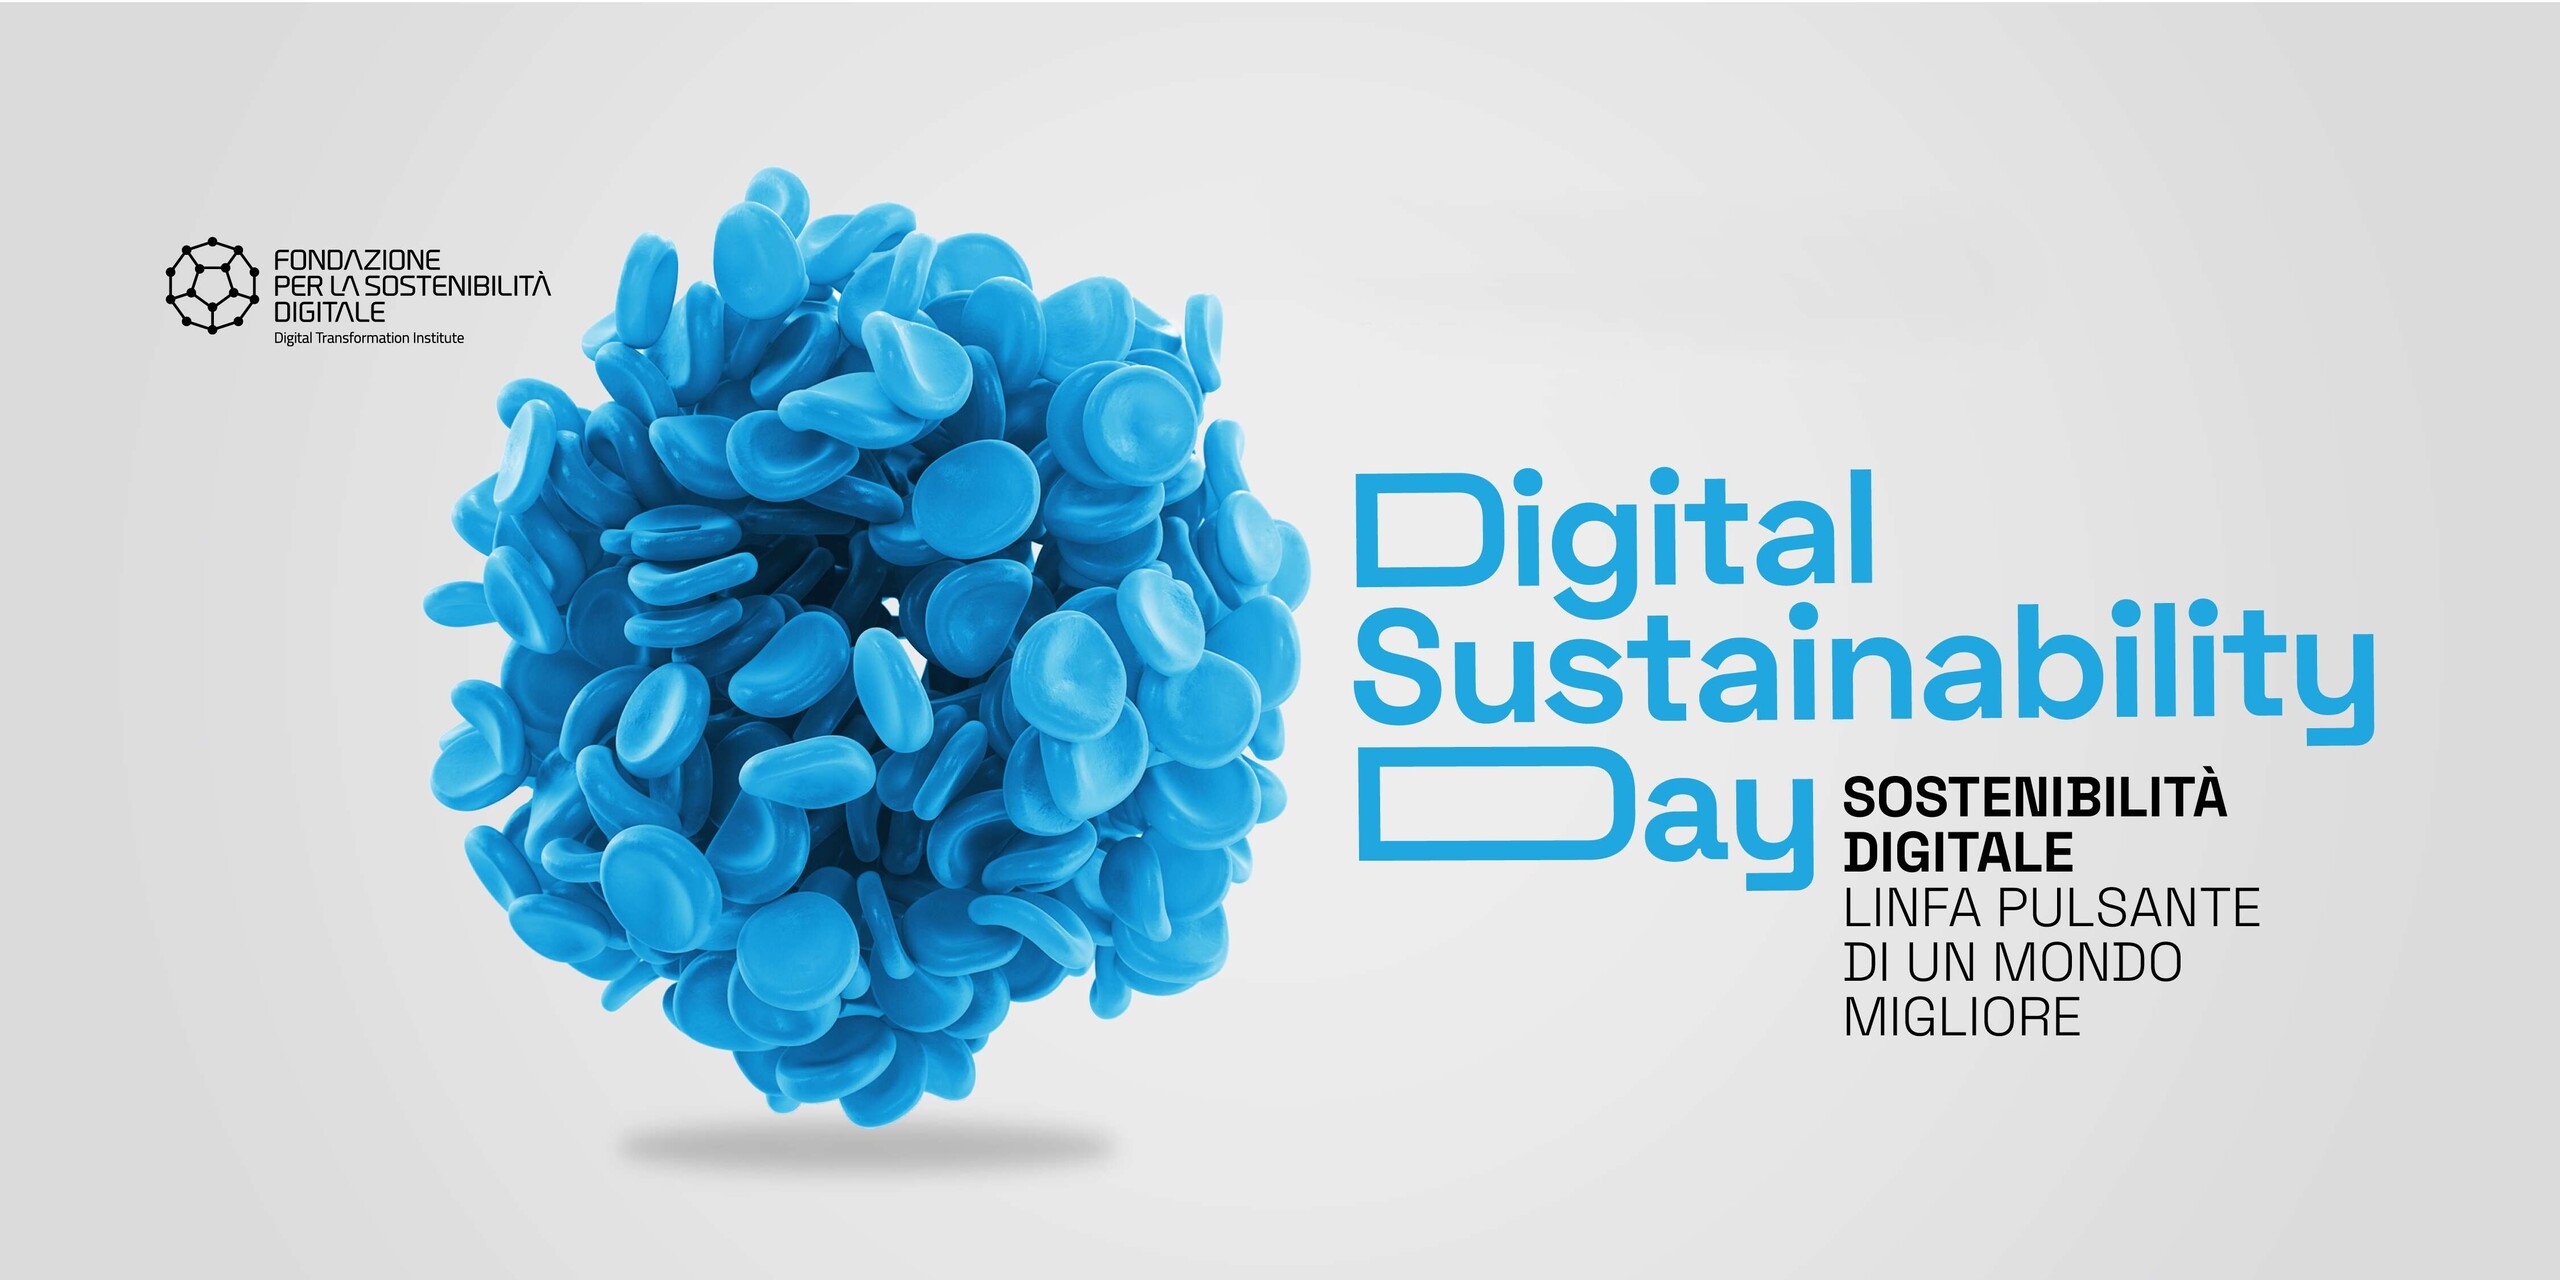 Stefano Epifani: คีย์วิชวลของงาน “Digital Sustainability Day” โปรโมตโดย Stefano Epifani